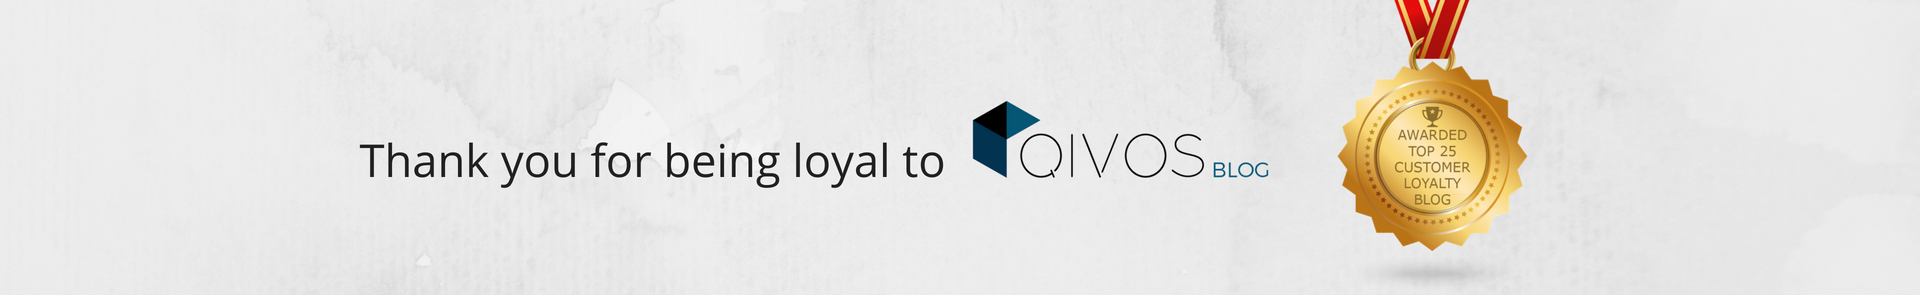 QIVOS loyalty blog